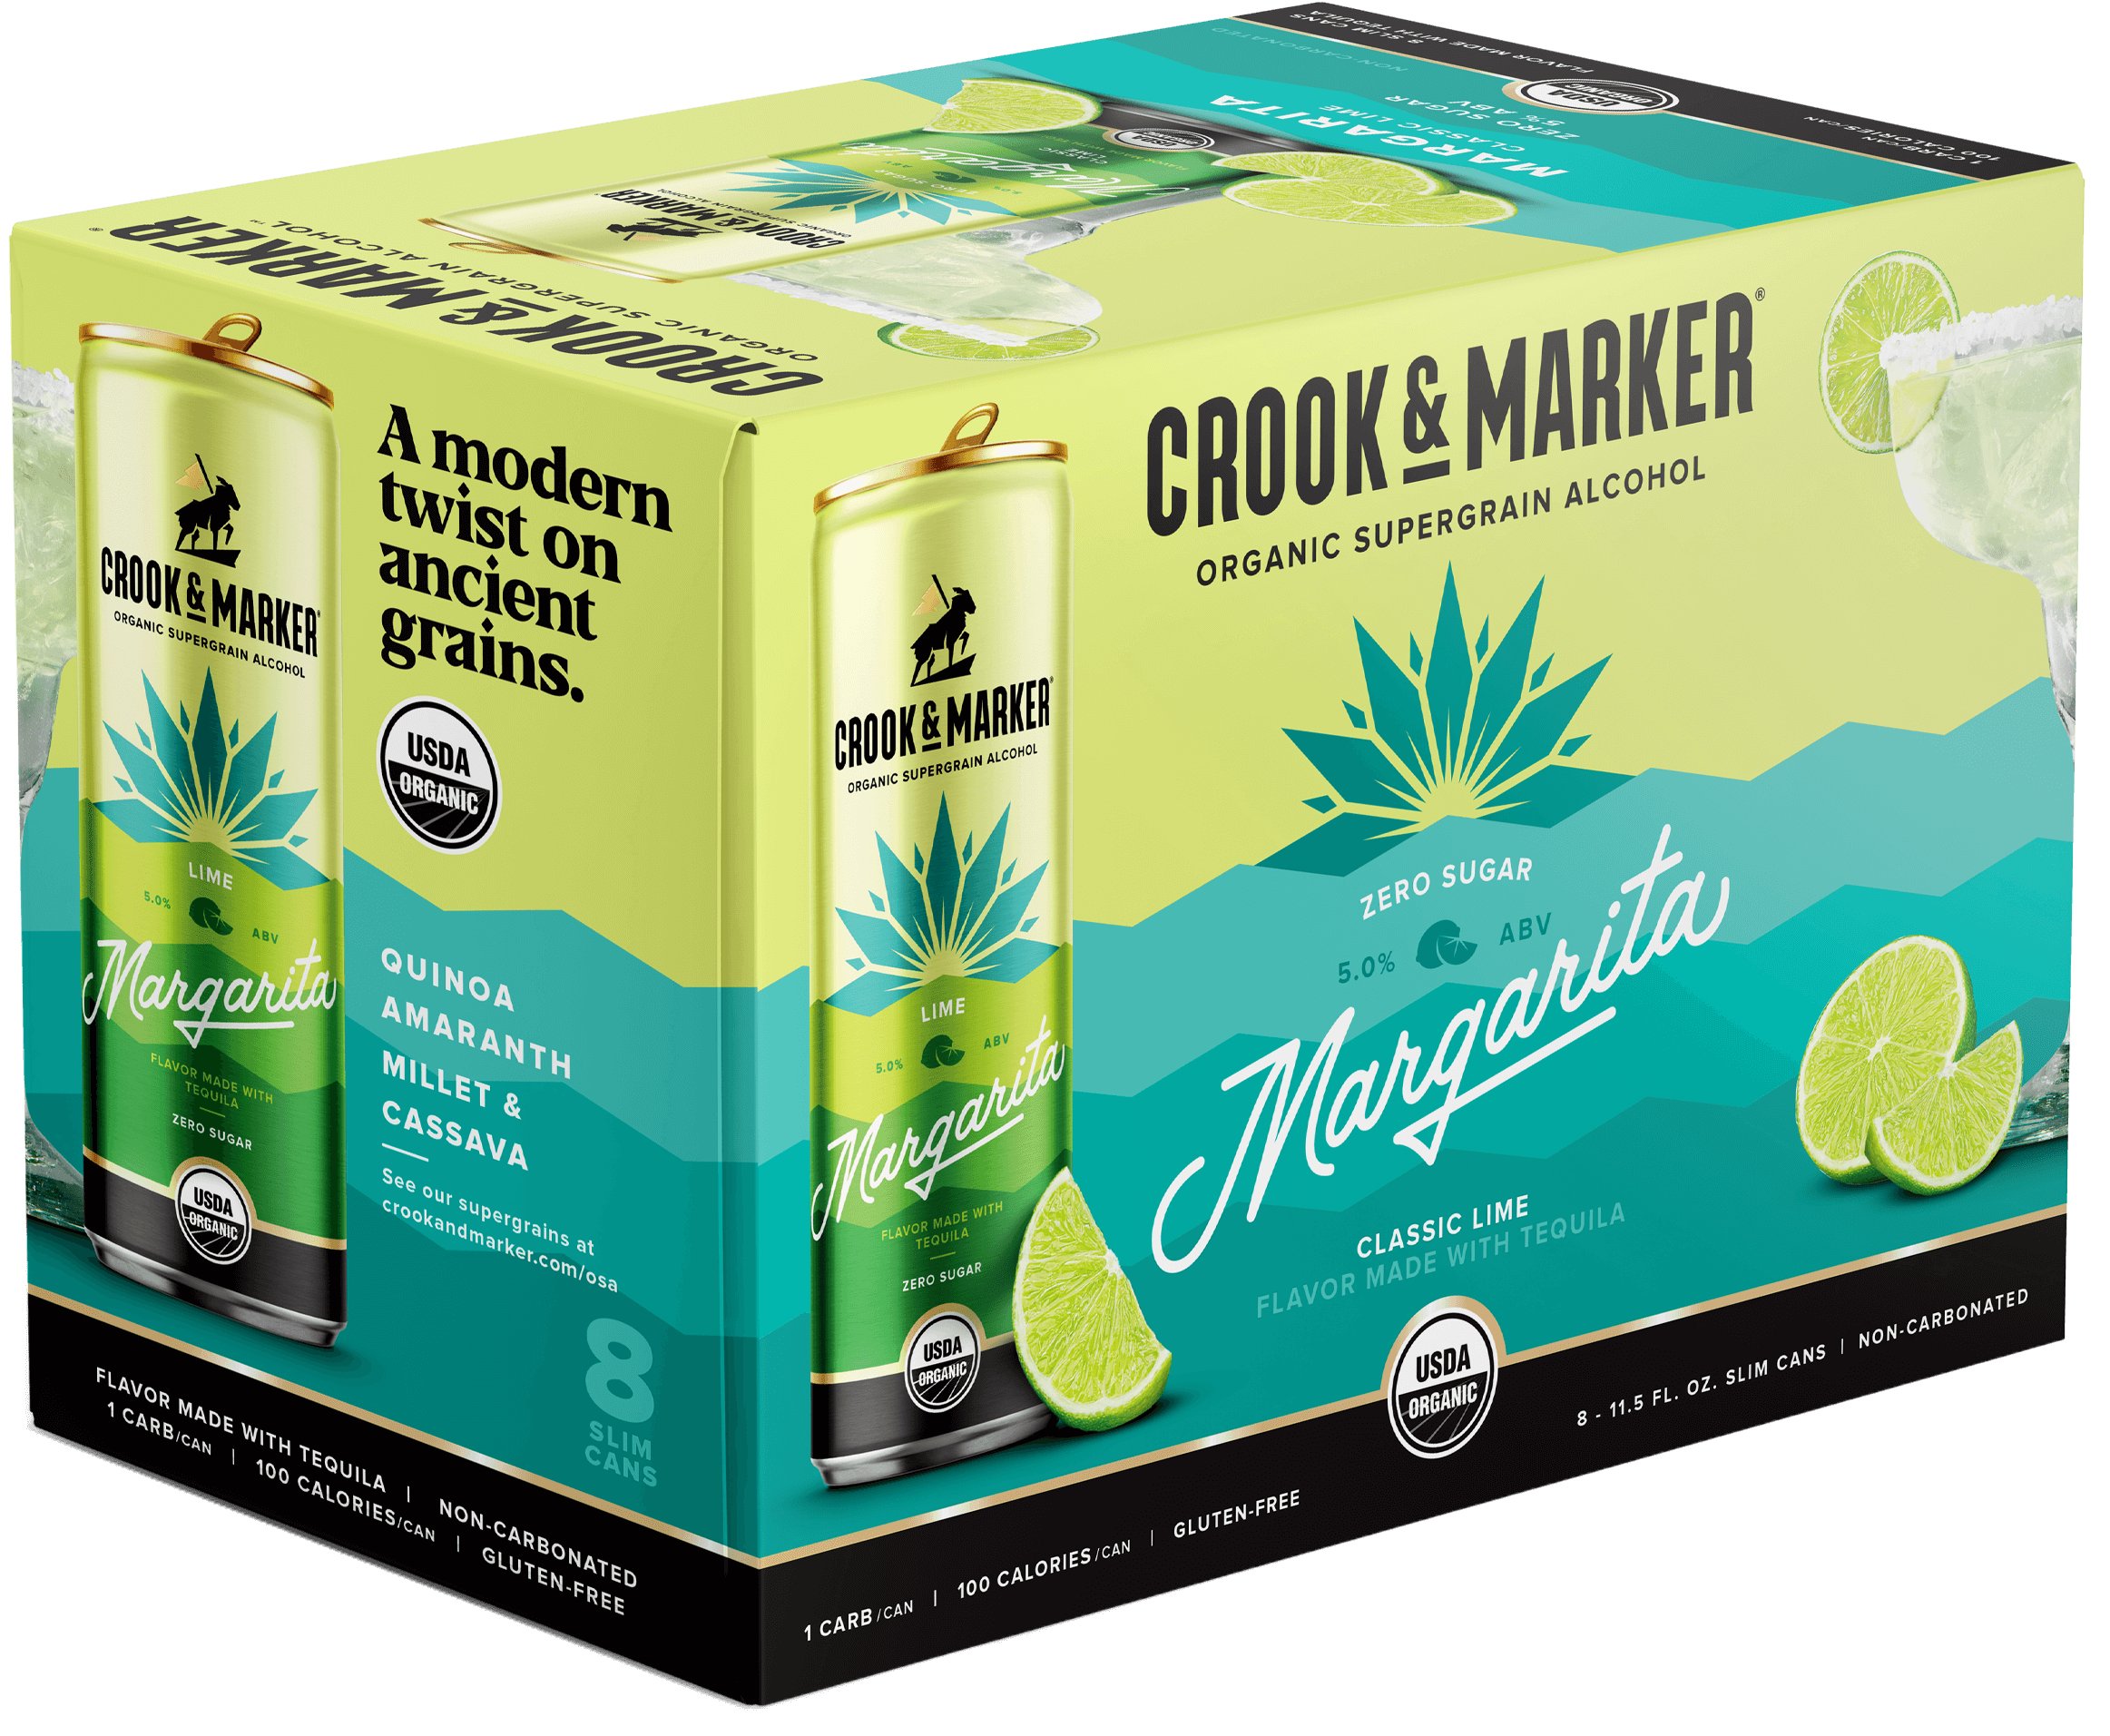 Crook & Marker - Margarita Classic Lime Box